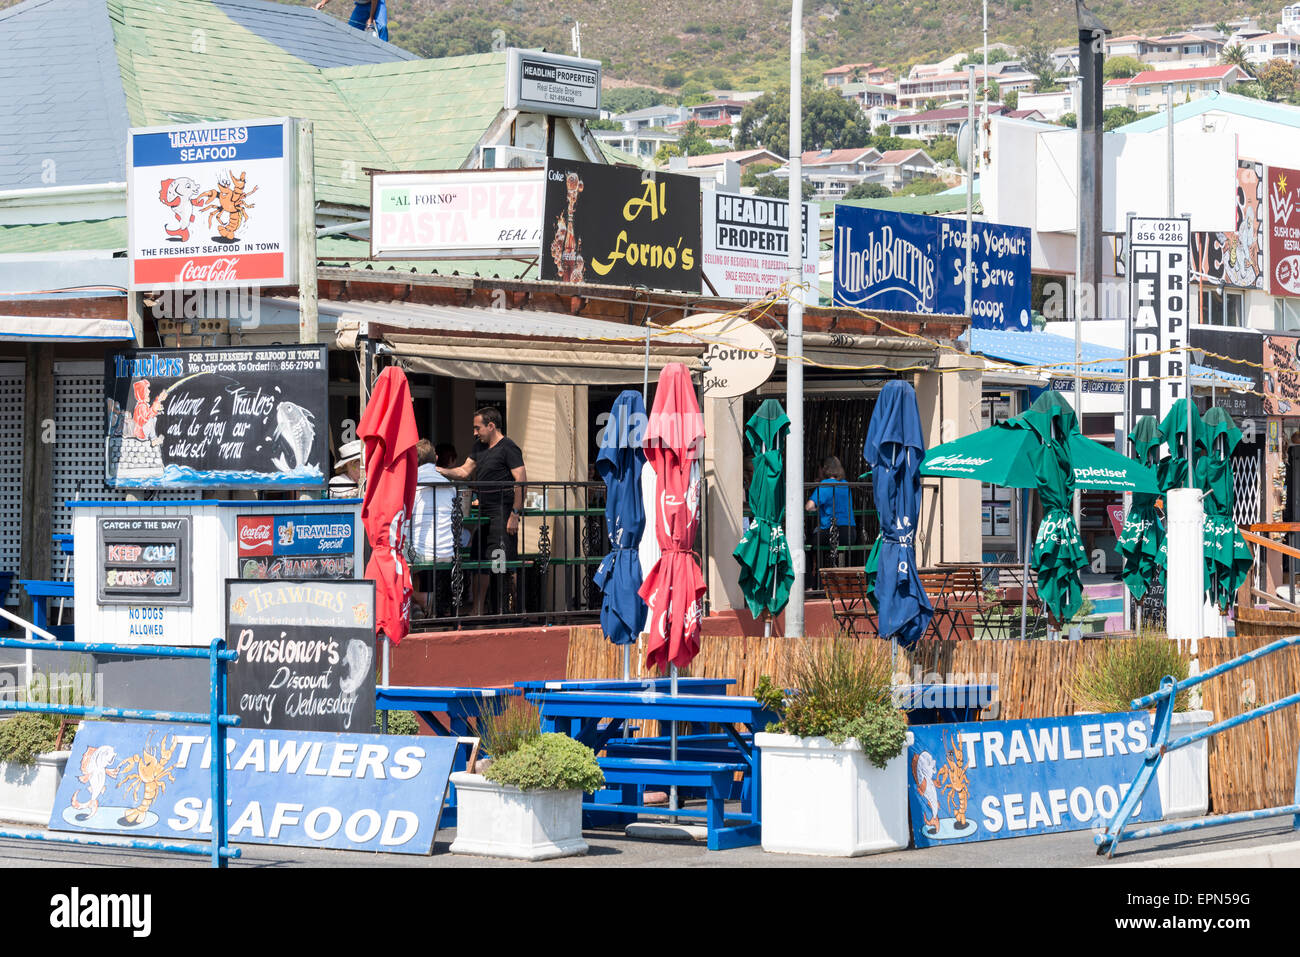 Trawlers seafood restaurant, Gordon's Bay, Helderberg District, Cape Peninsula, Western Cape Province, Republic of South Africa Stock Photo